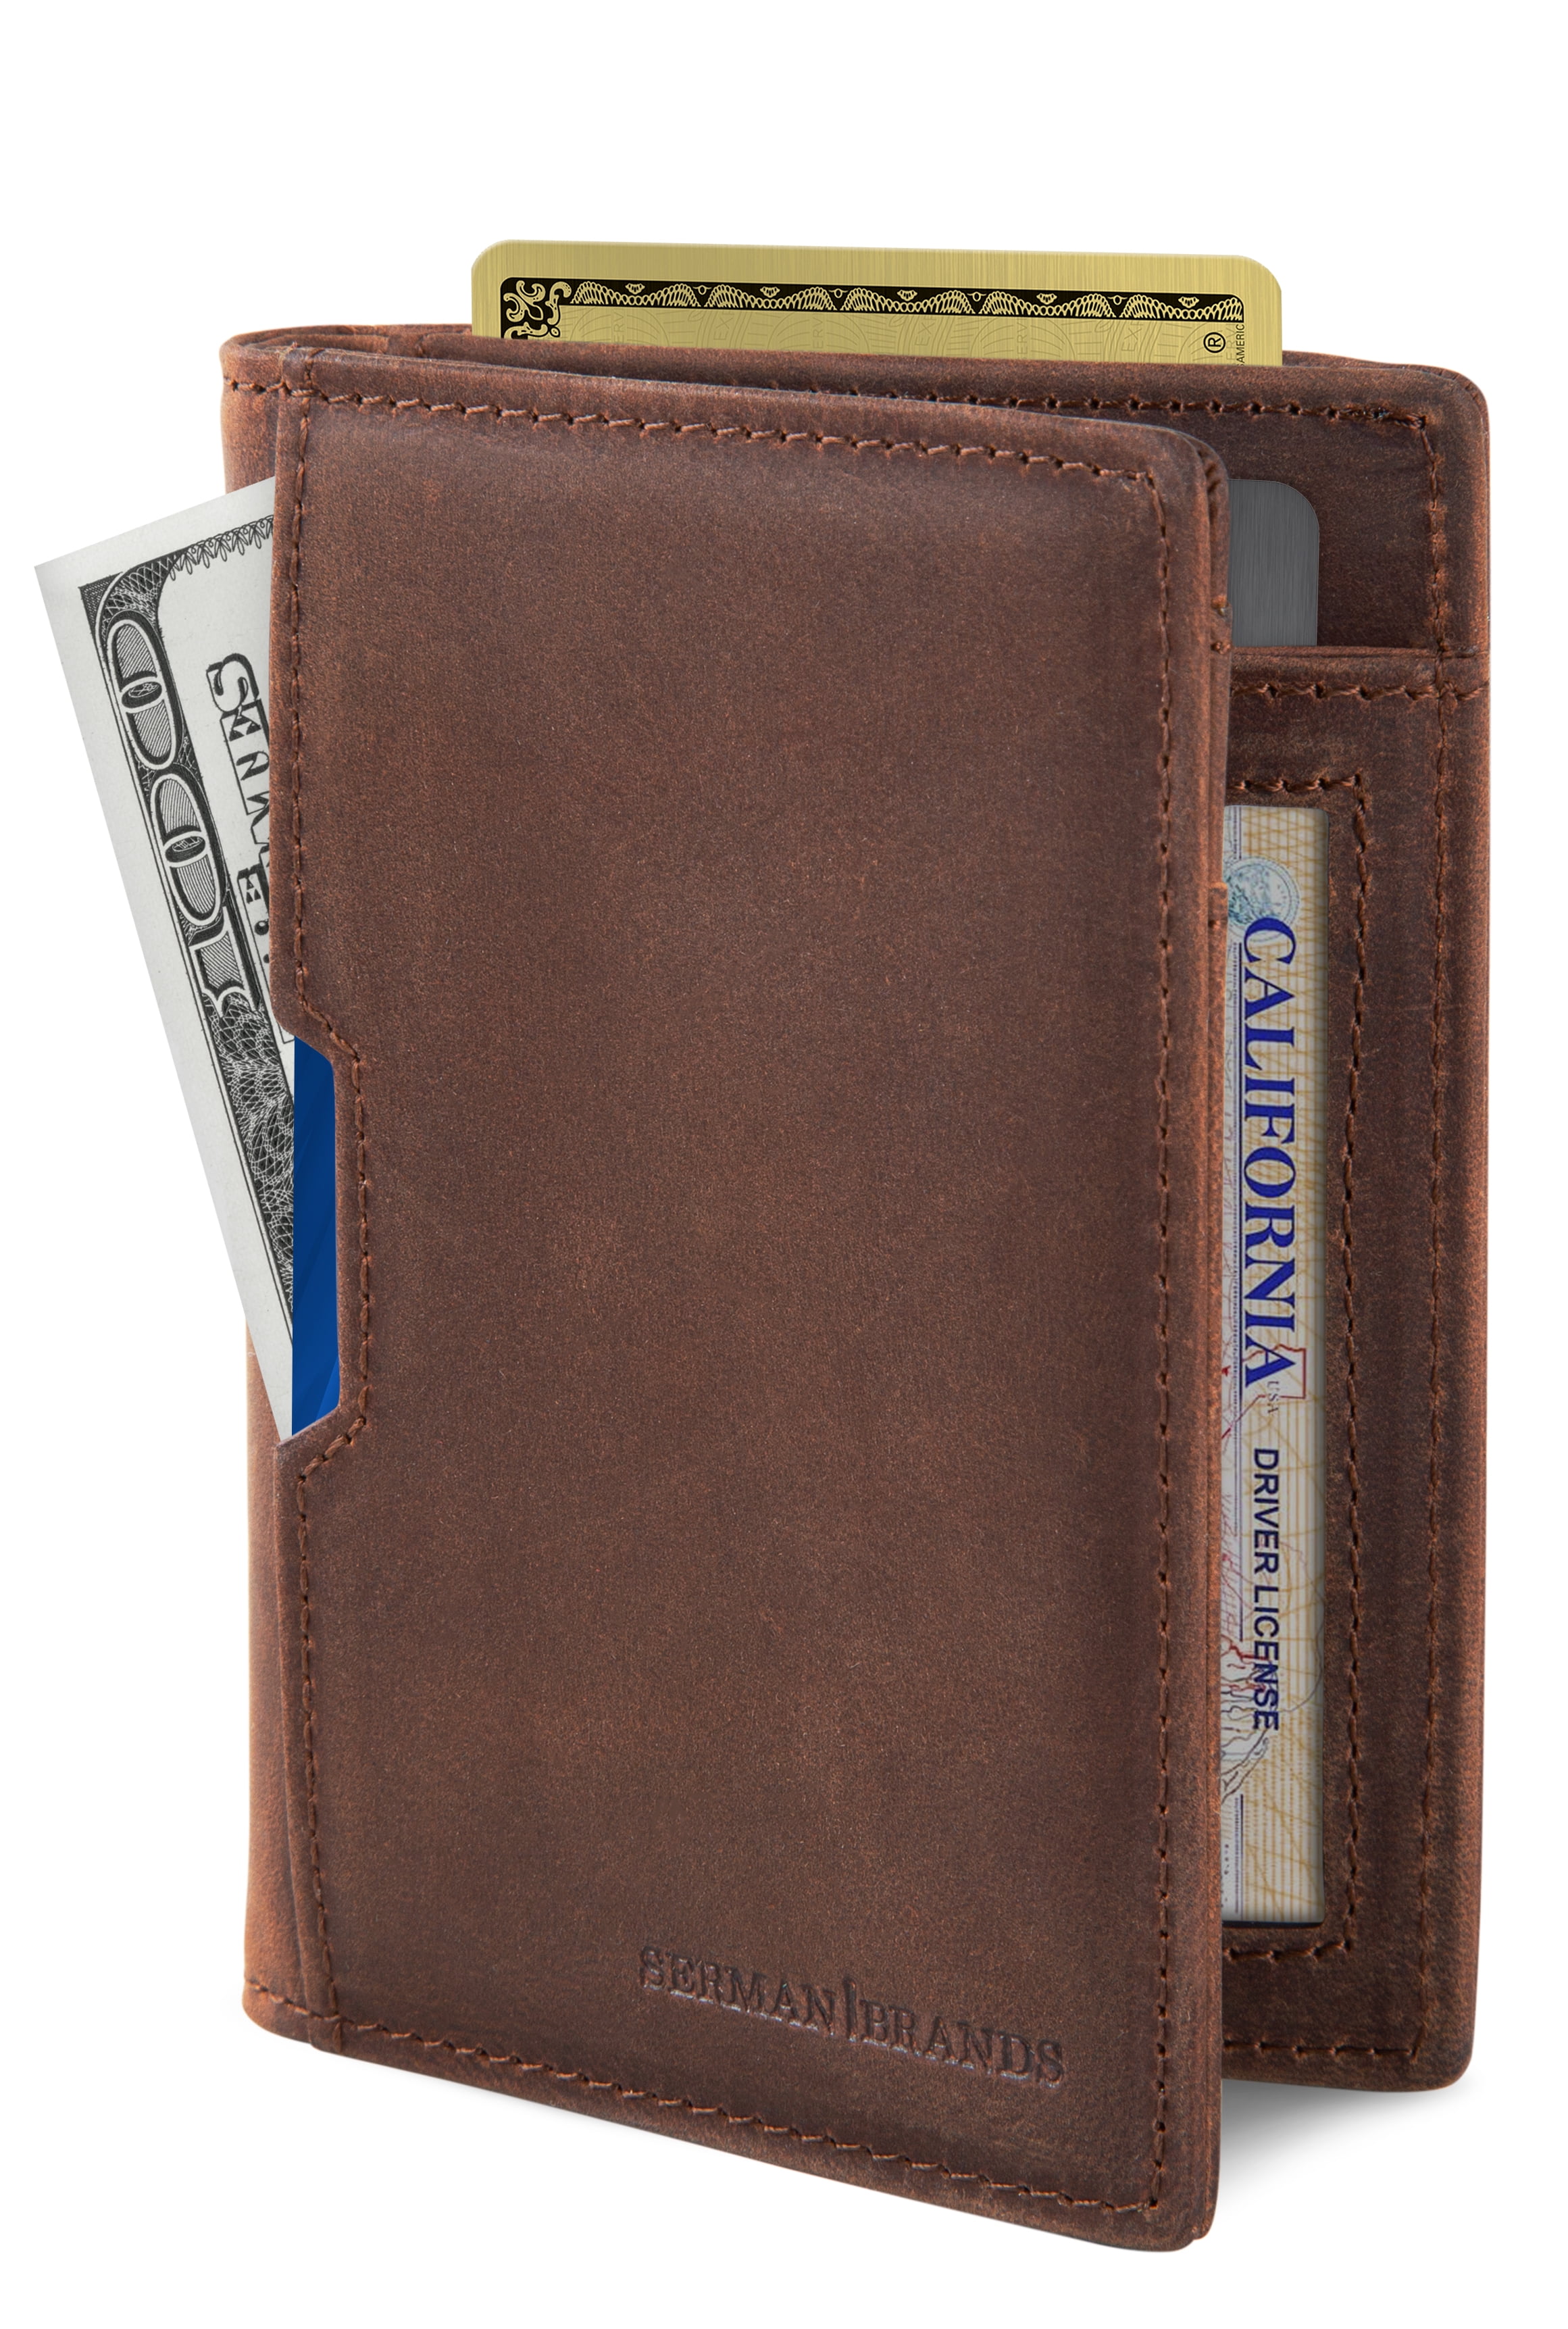 Serman Brands Travel Wallet | RFID Blocking | Bifold Slim Genuine ...